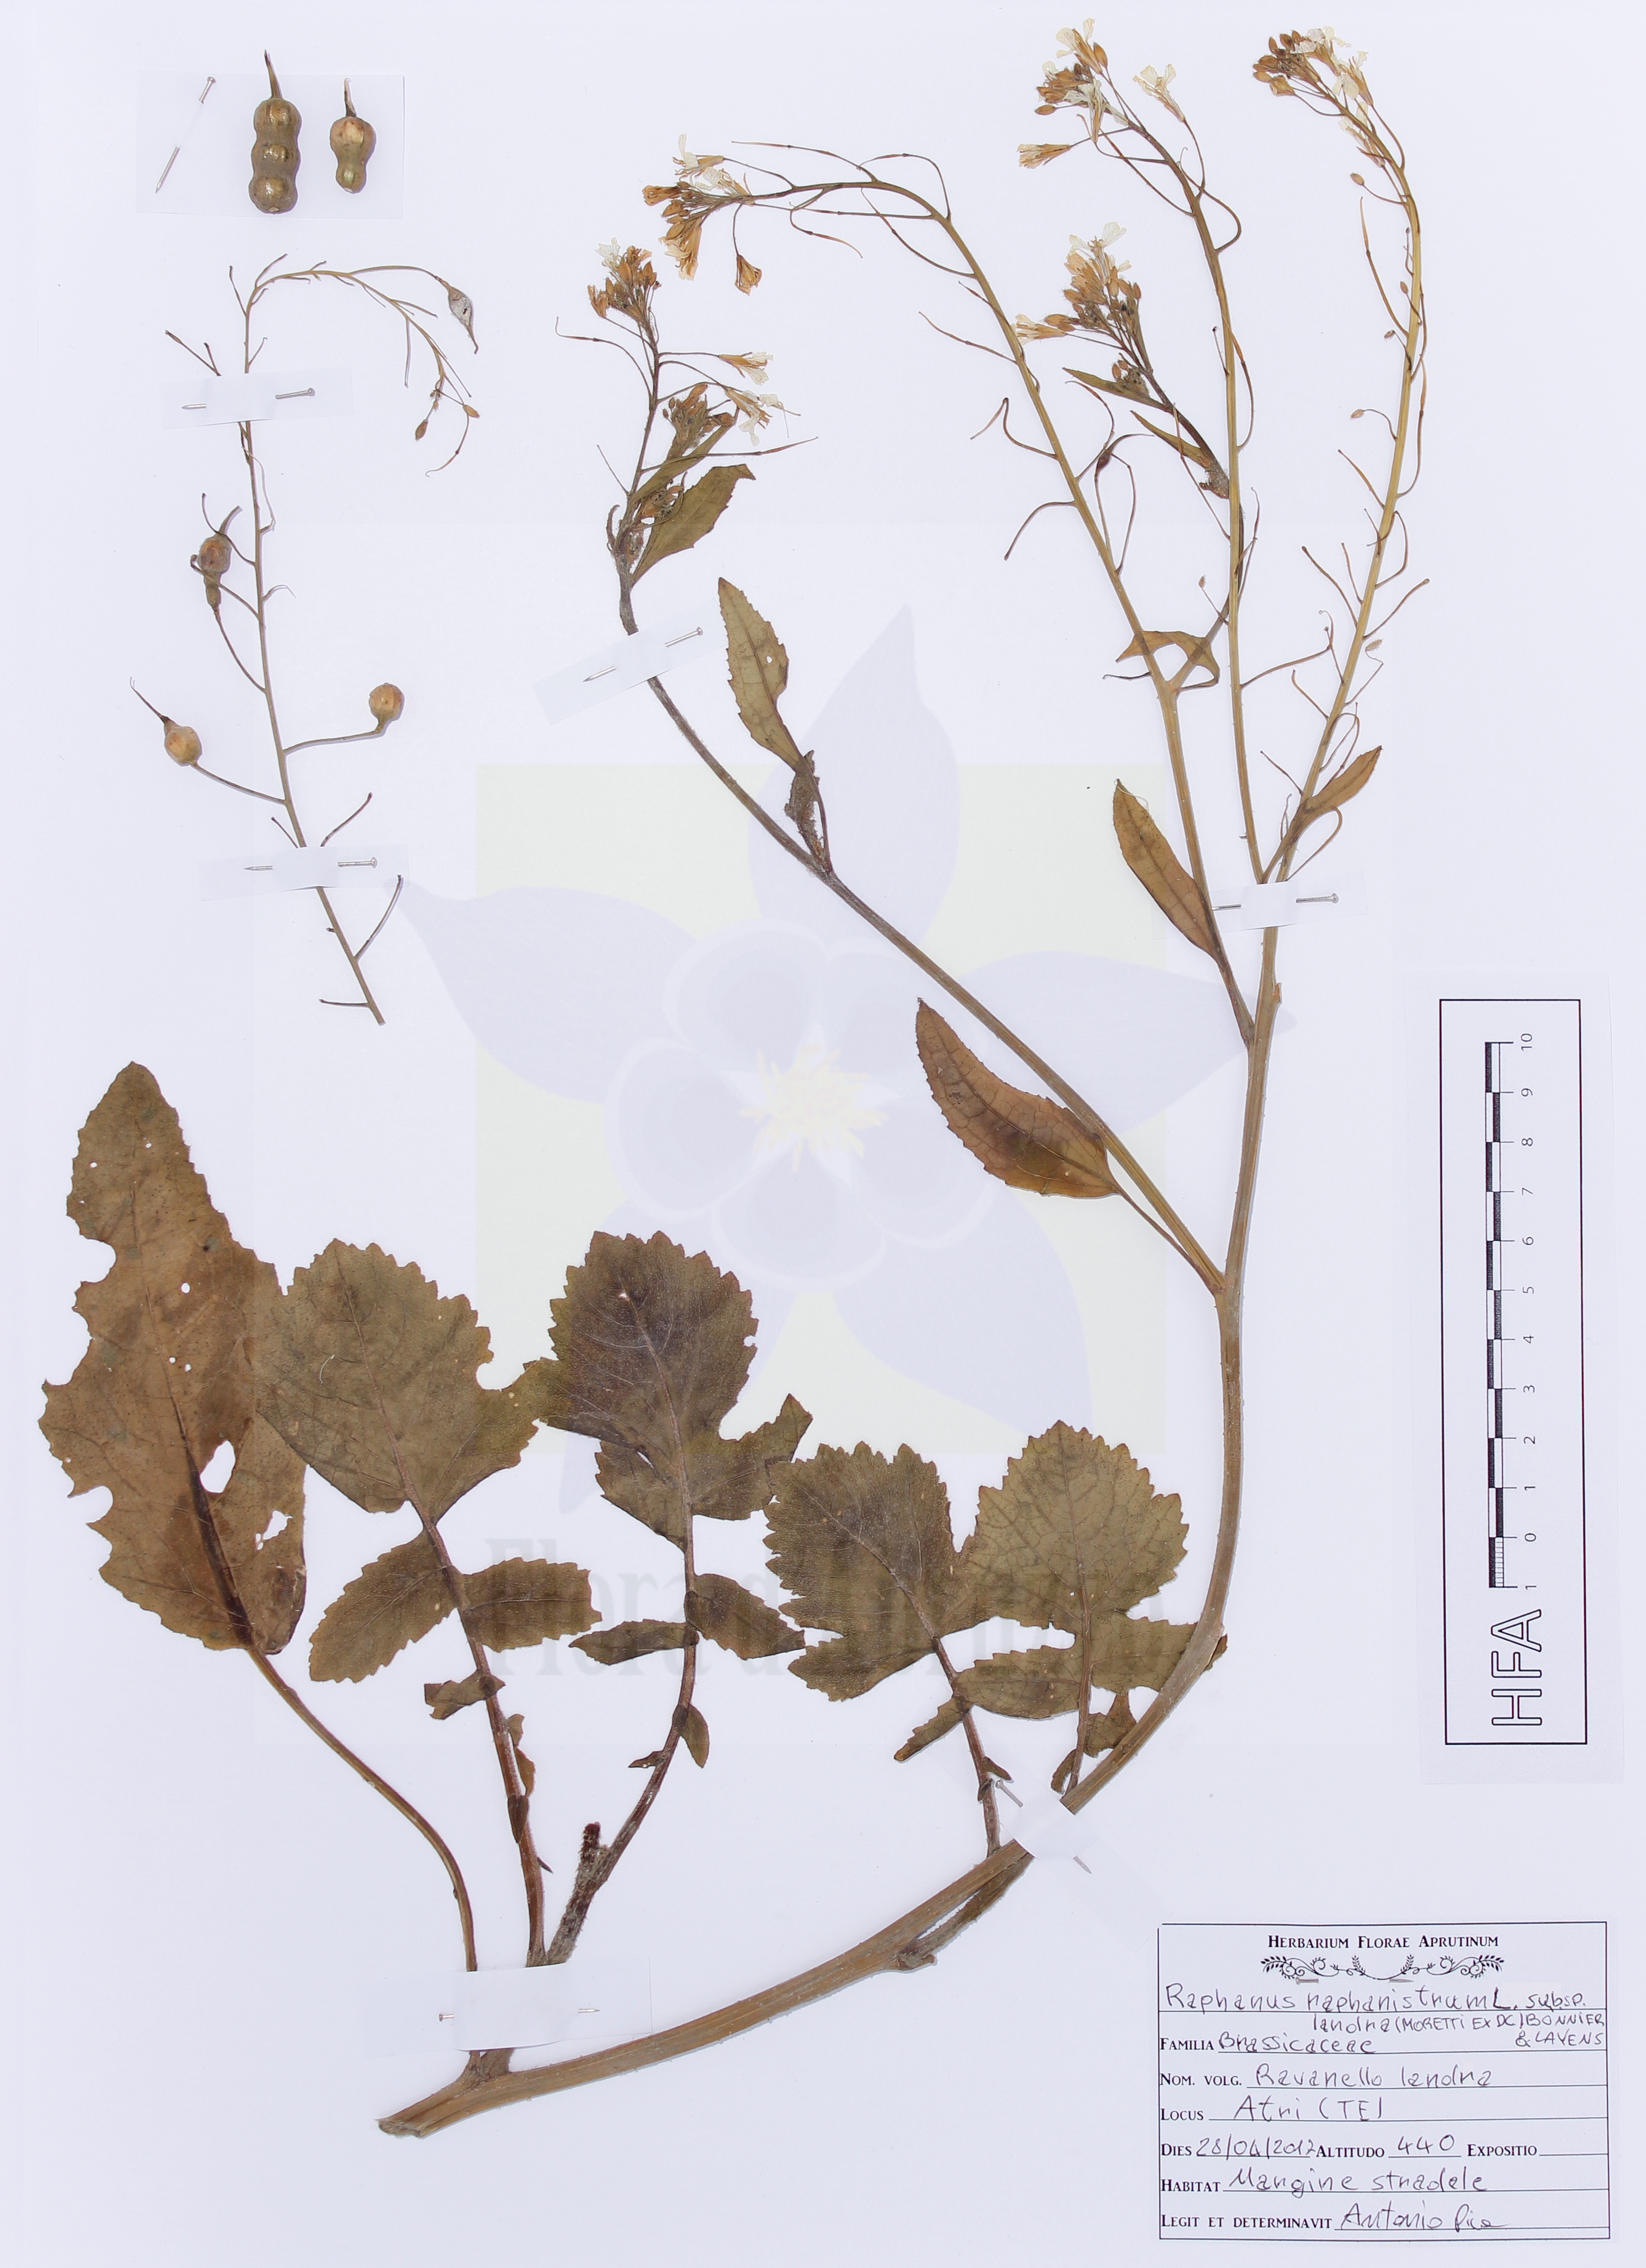 Raphanus raphanistrum L. subsp. landra (Moretti ex DC.) Bonnier & Layens